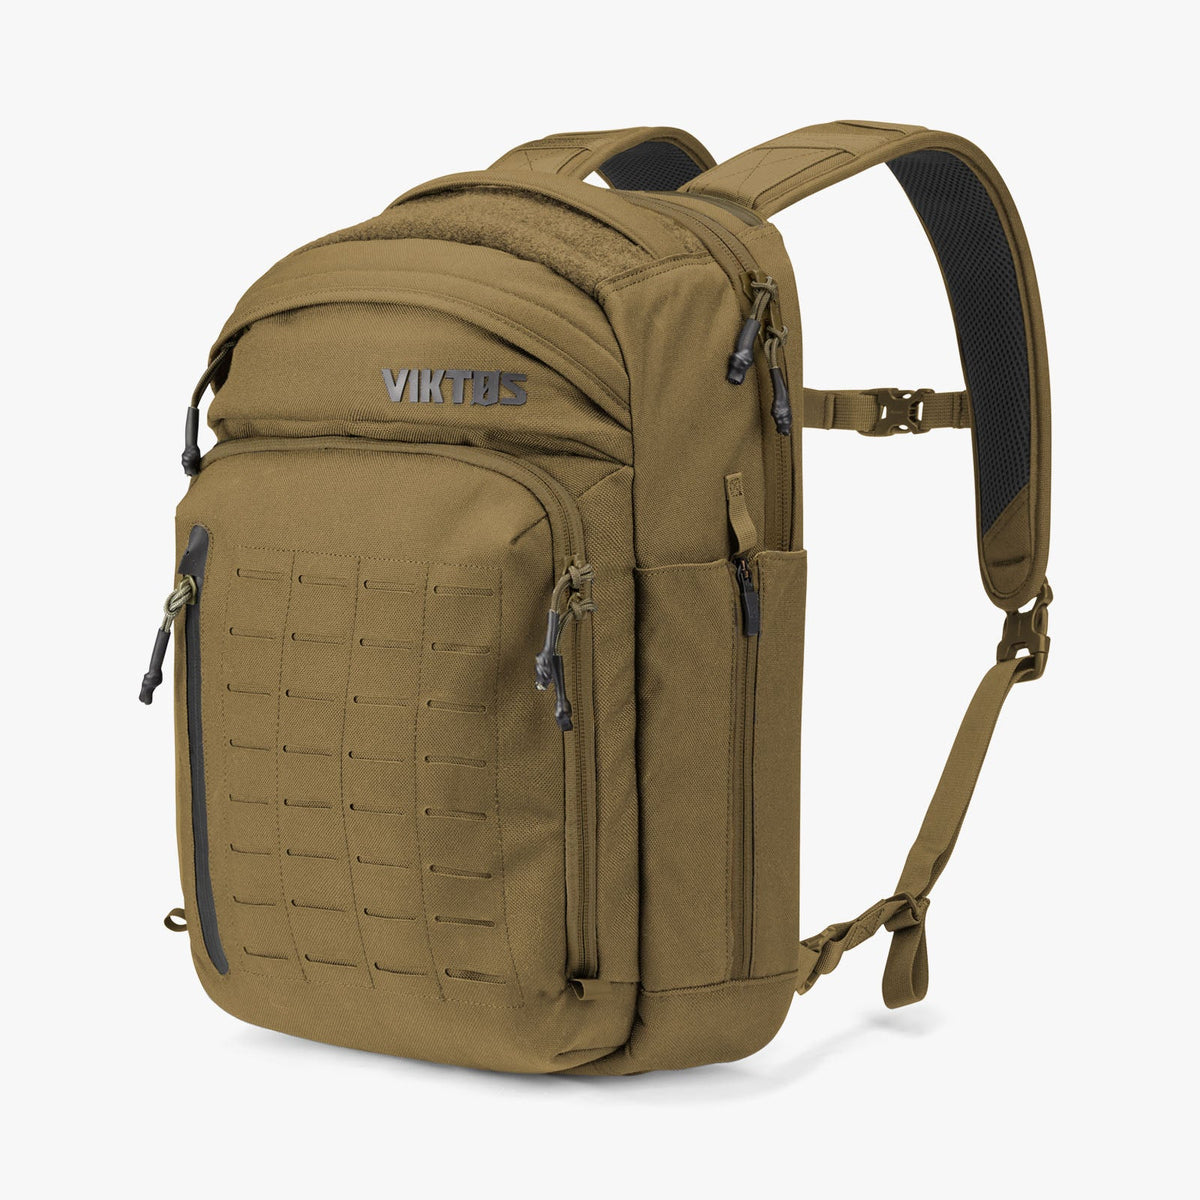 VIKTOS Perimeter 25L Backpack Coyote Tactical Gear Australia Supplier Distributor Dealer